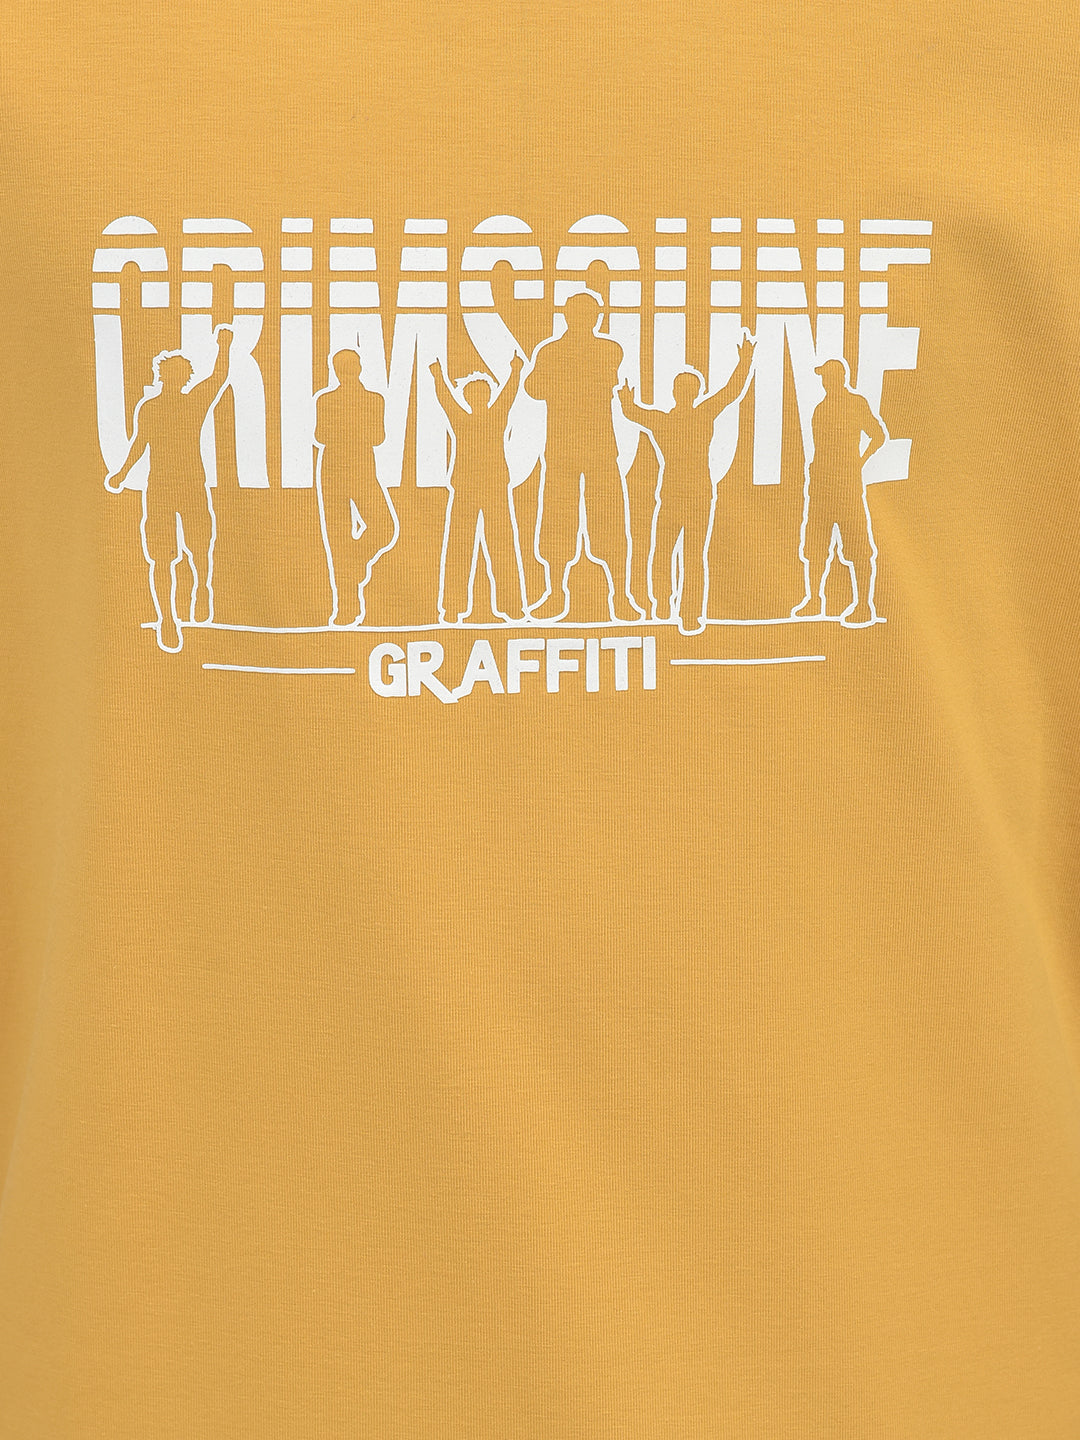 Graphic Mustard T-shirt-Boys T-Shirts-Crimsoune Club